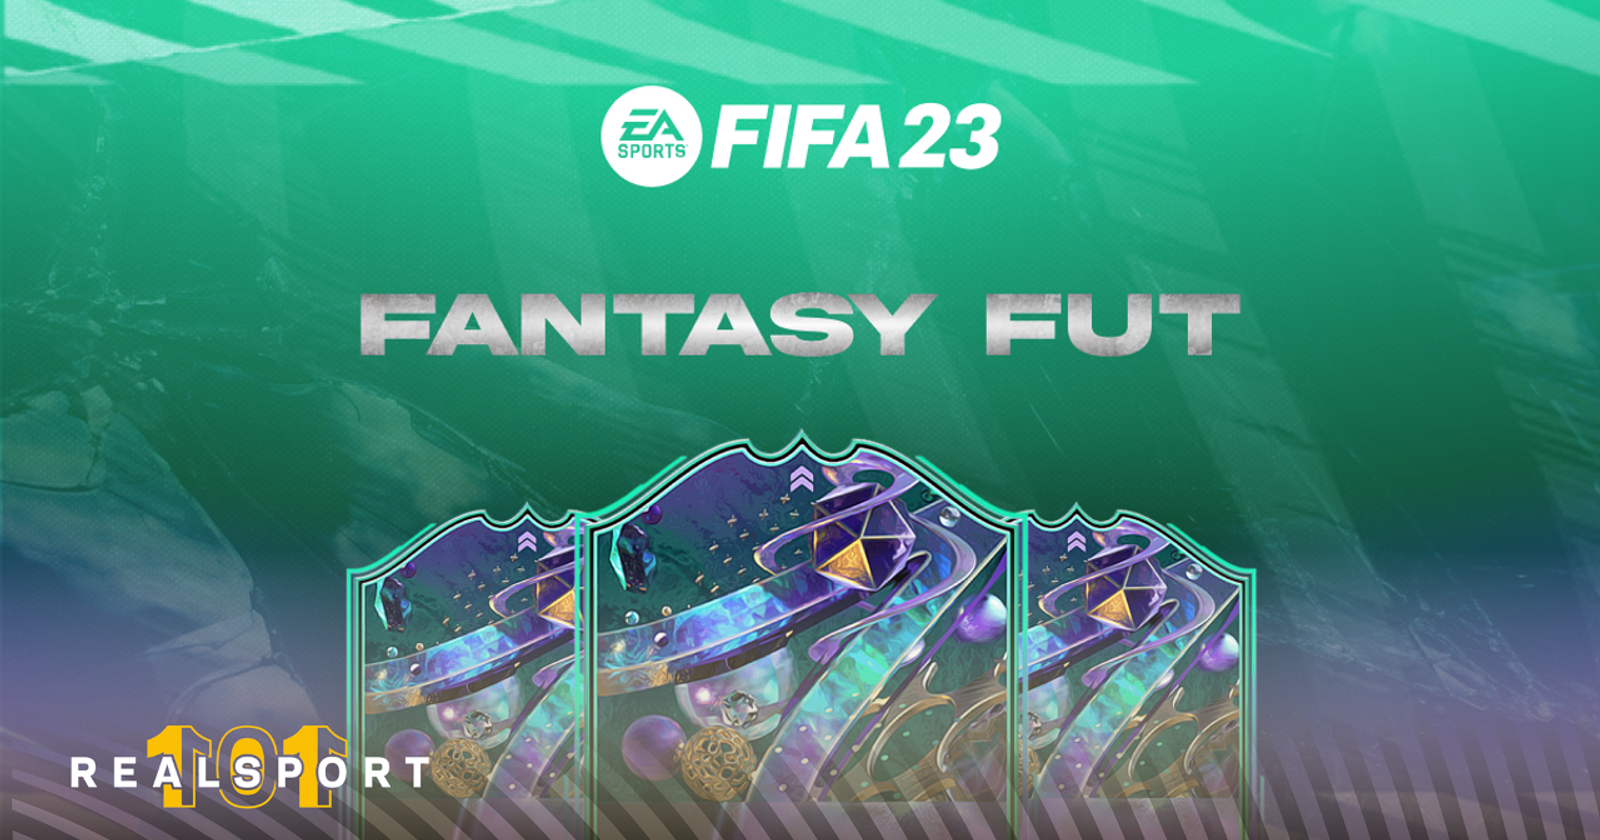 All leaked FIFA 23 Fantasy FUT Hero cards, including Ginola, Pele, and more